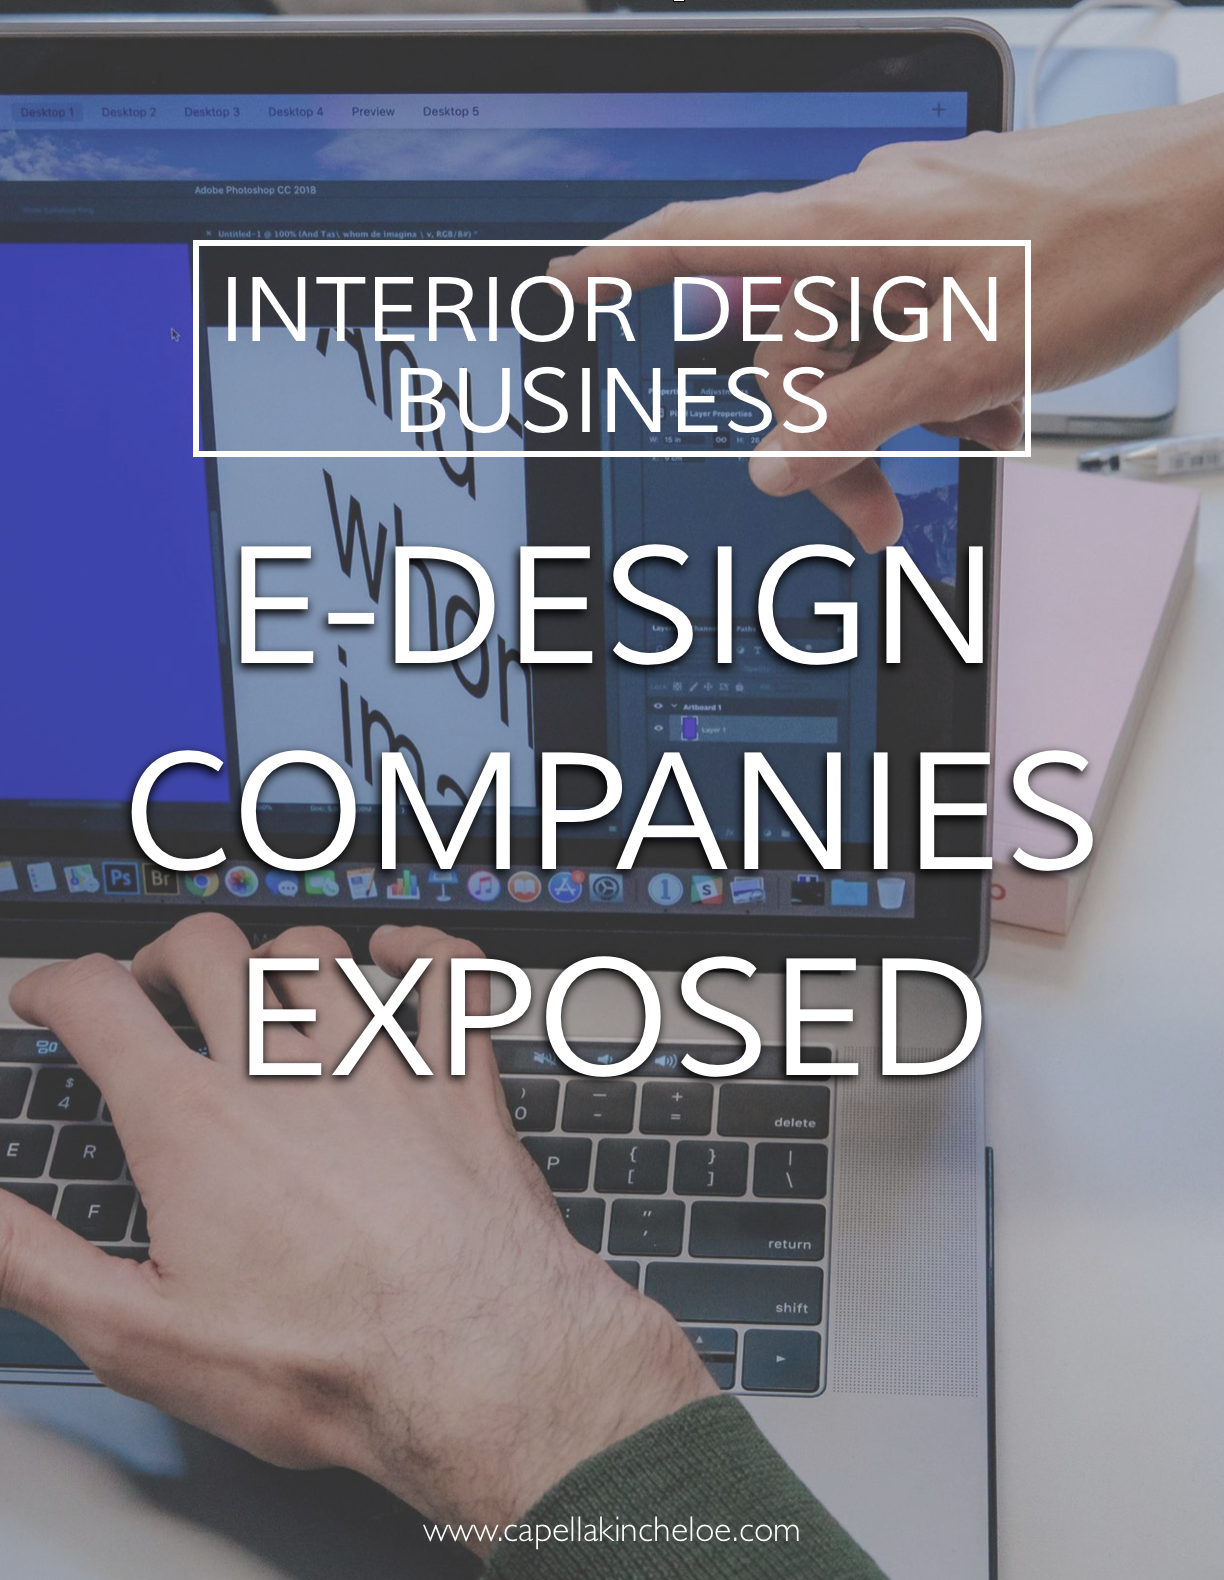 E-Design Companies Exposed